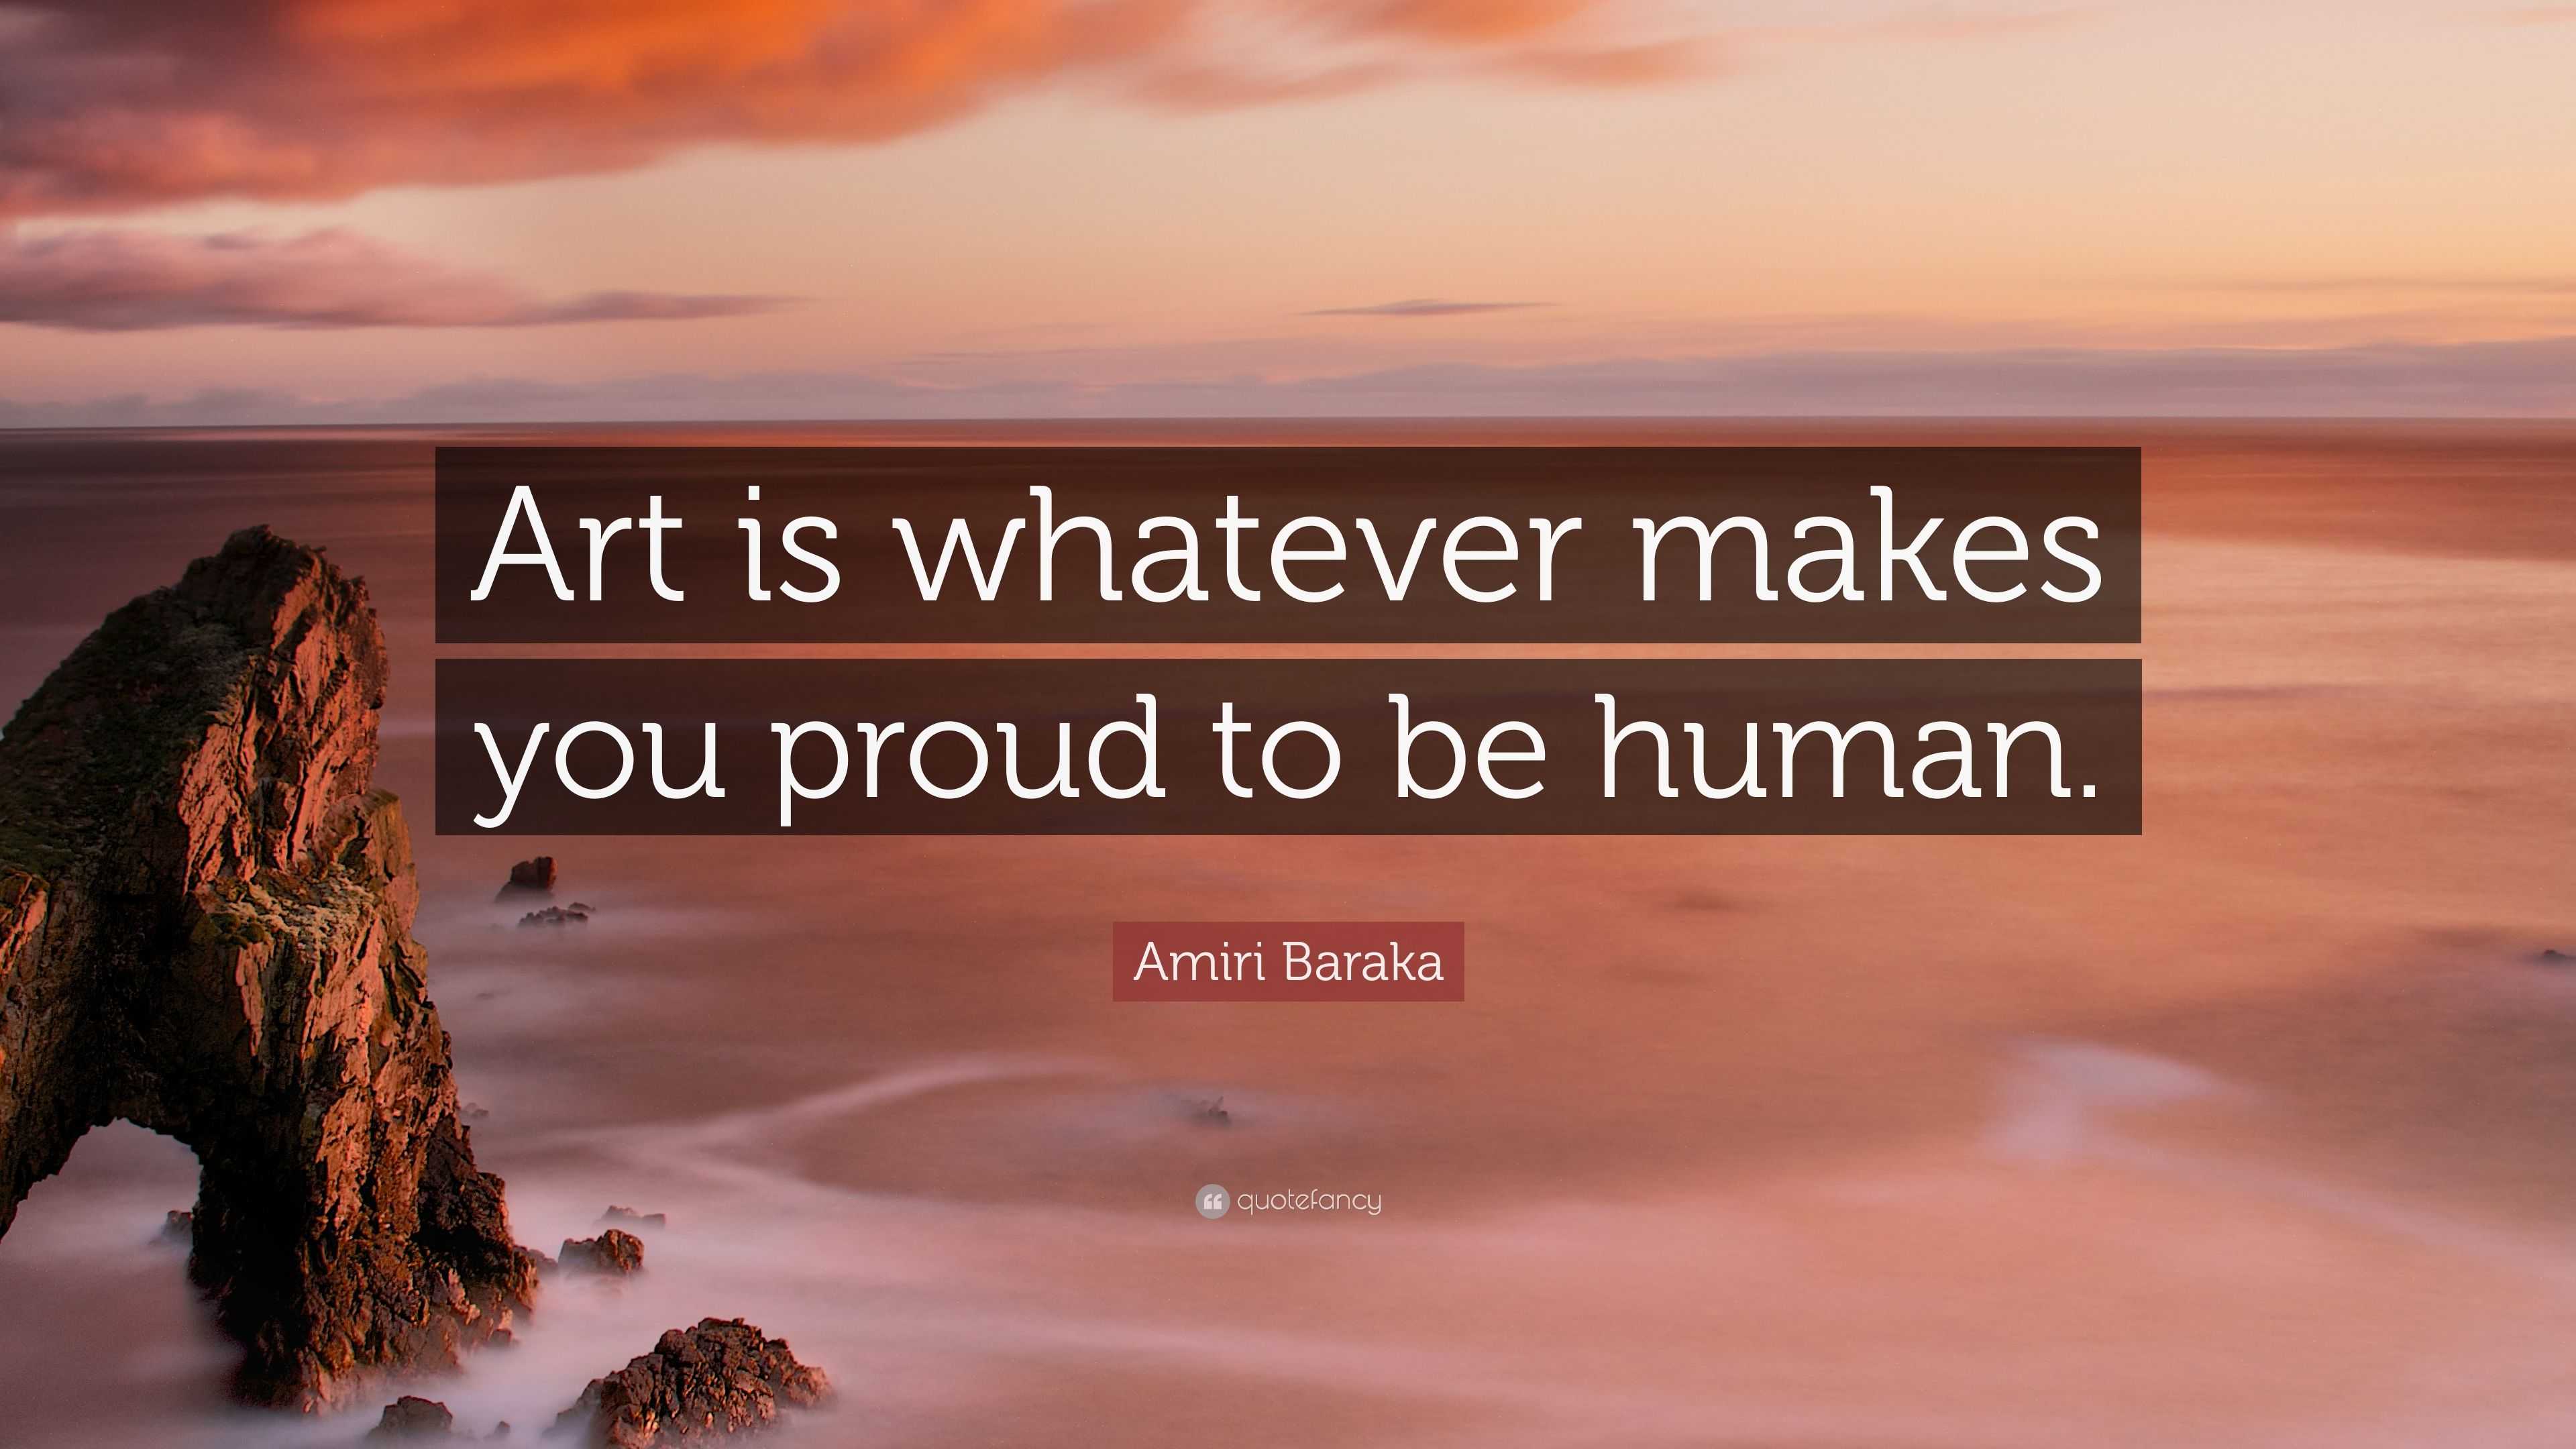 Amiri Baraka Quote: “Art is whatever makes you proud to be human.”